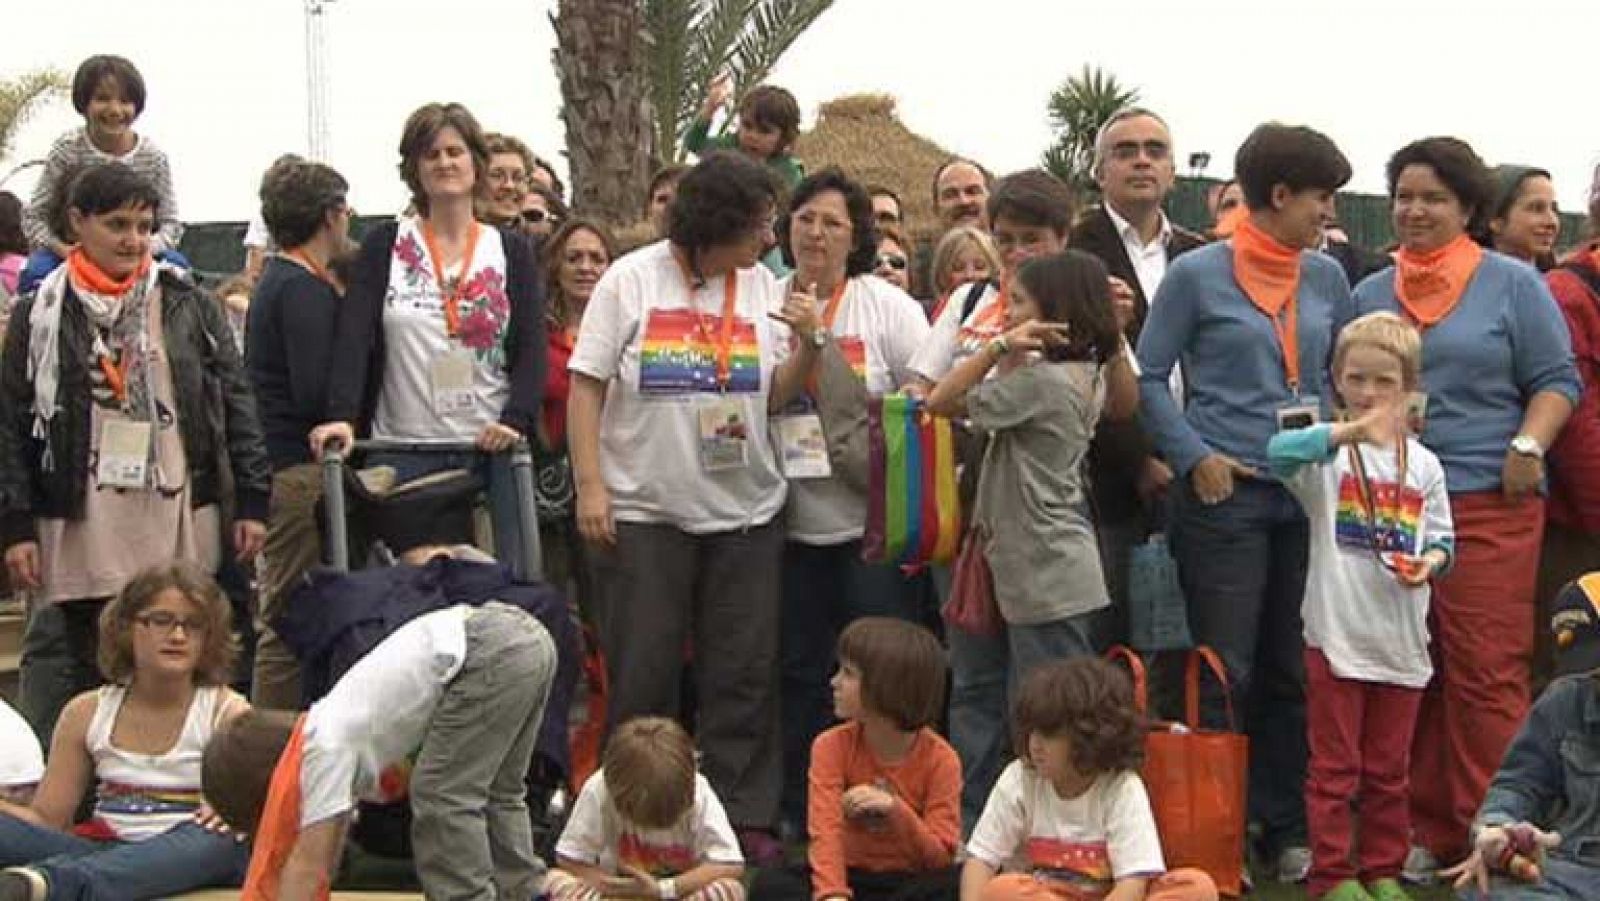 Telediario 1: Encuentro europeo de gays  | RTVE Play